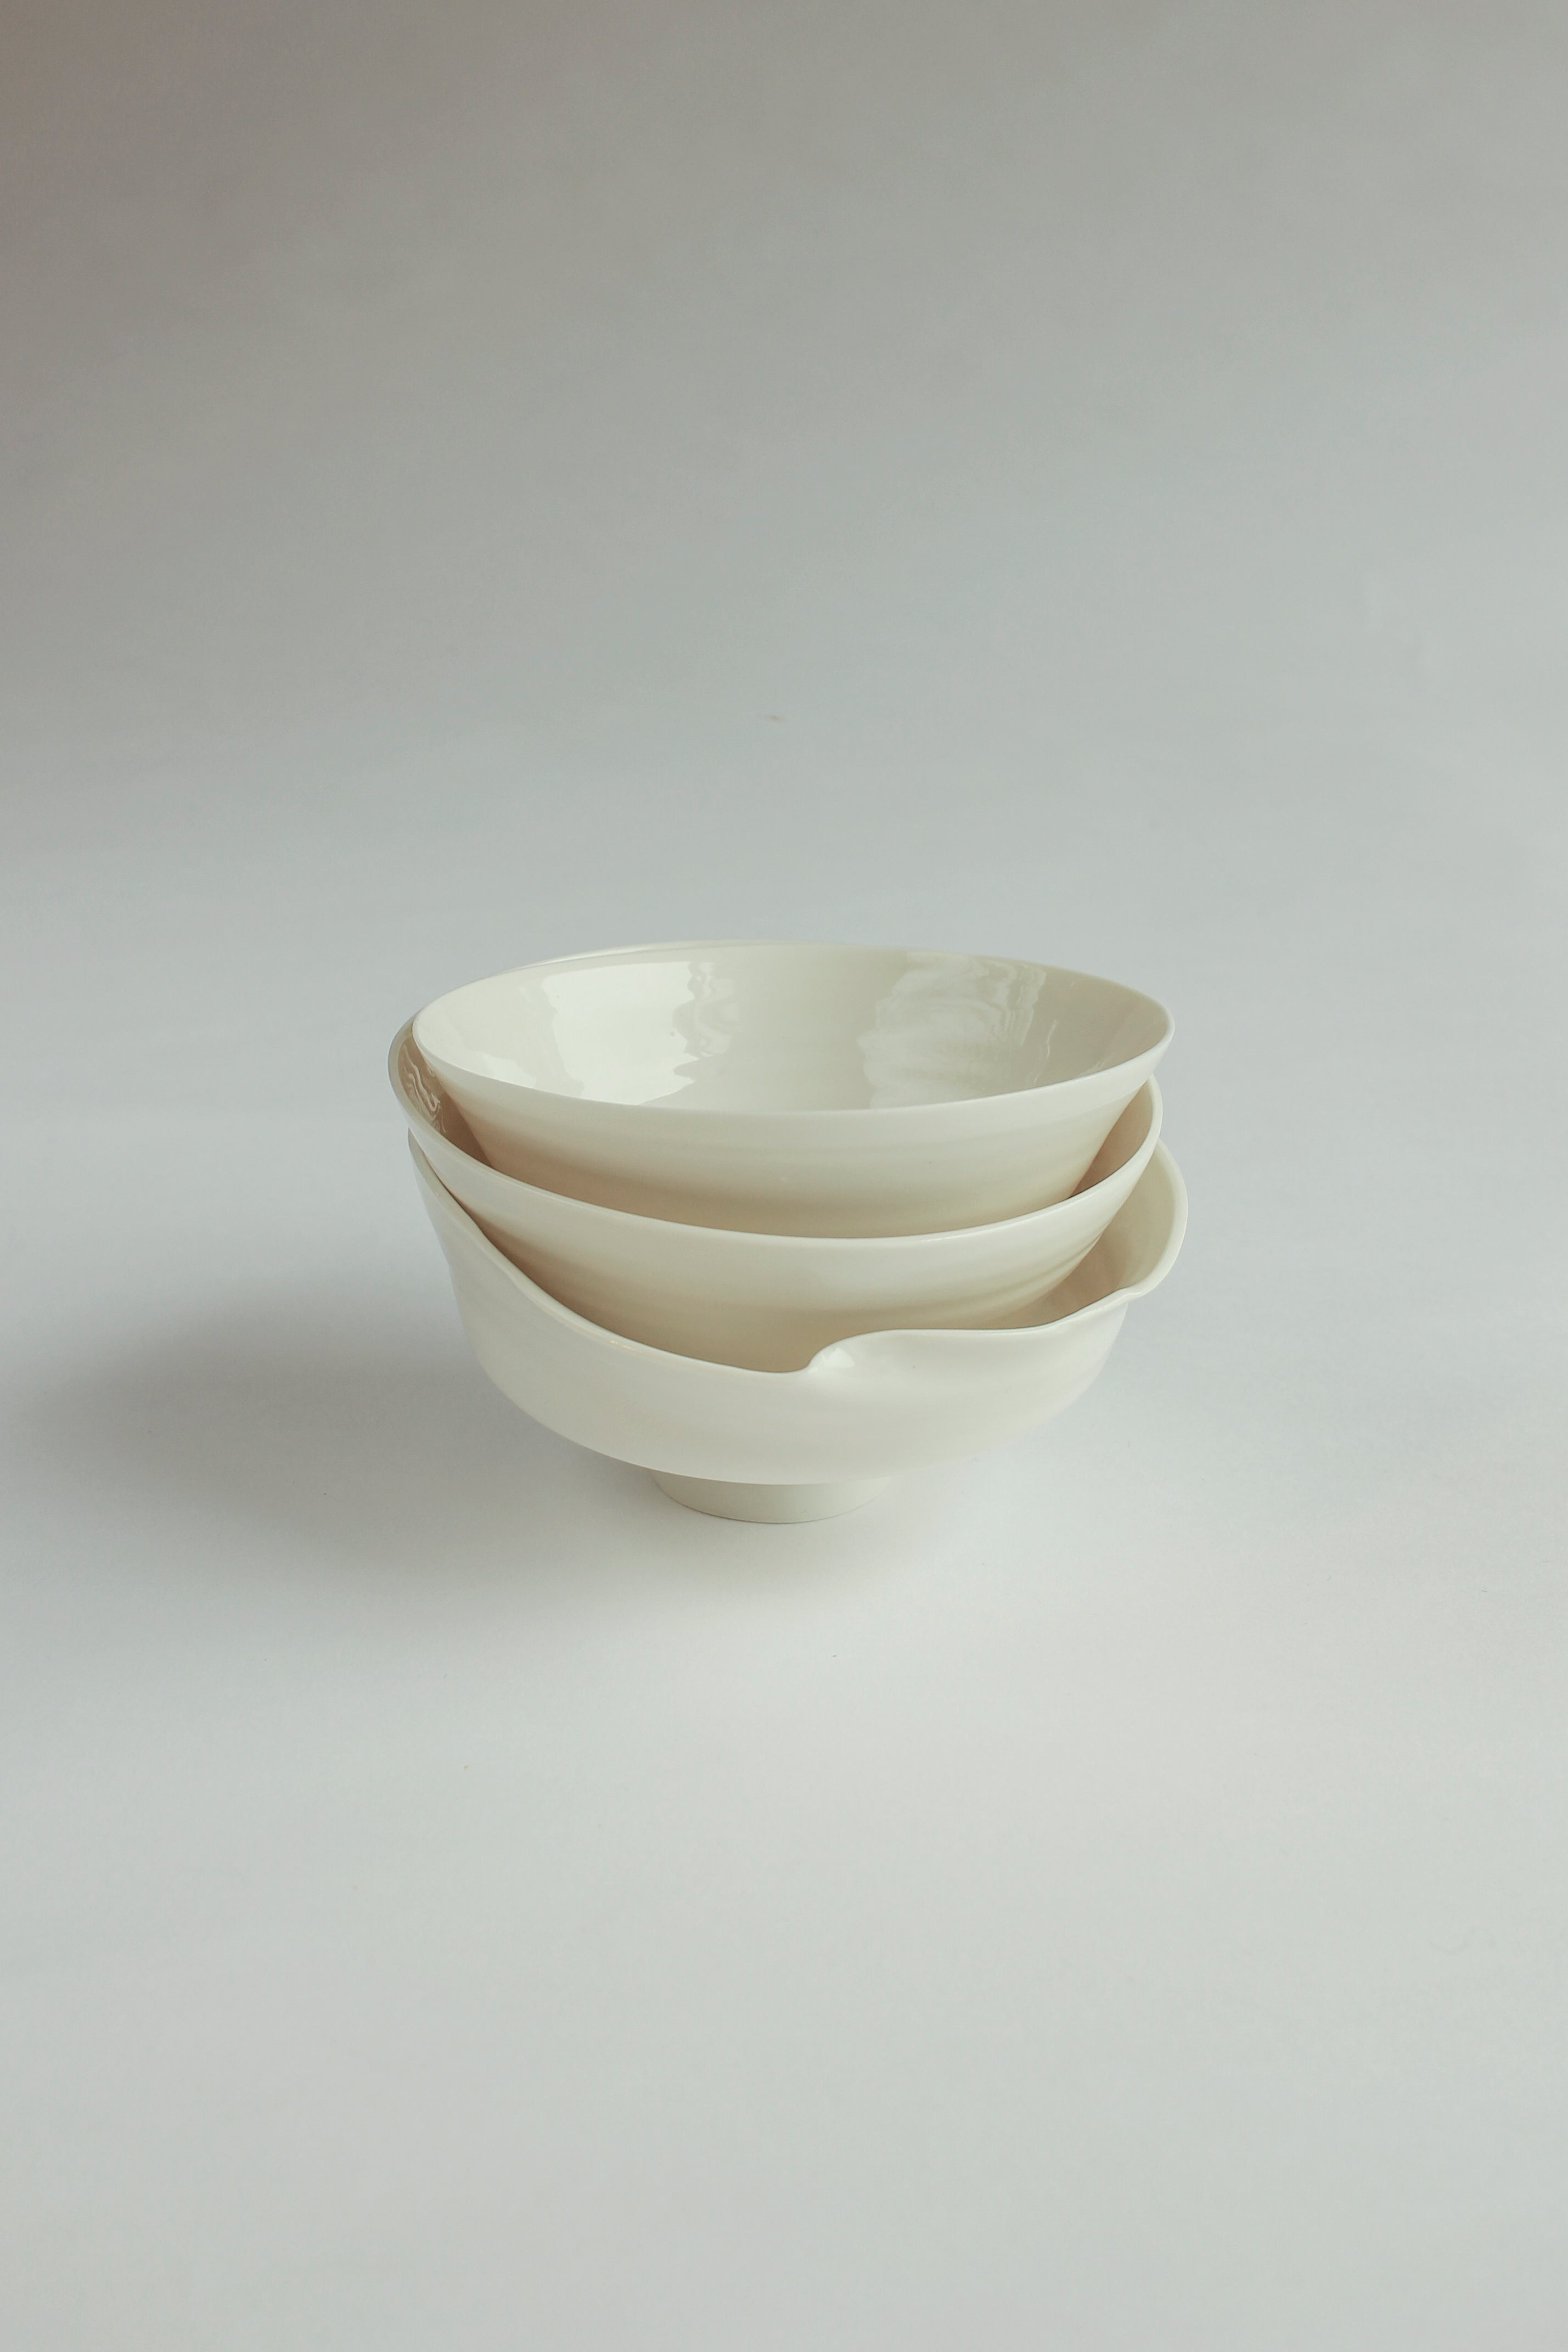 Tribute to Craftsmanship / Three bowls / Set 5